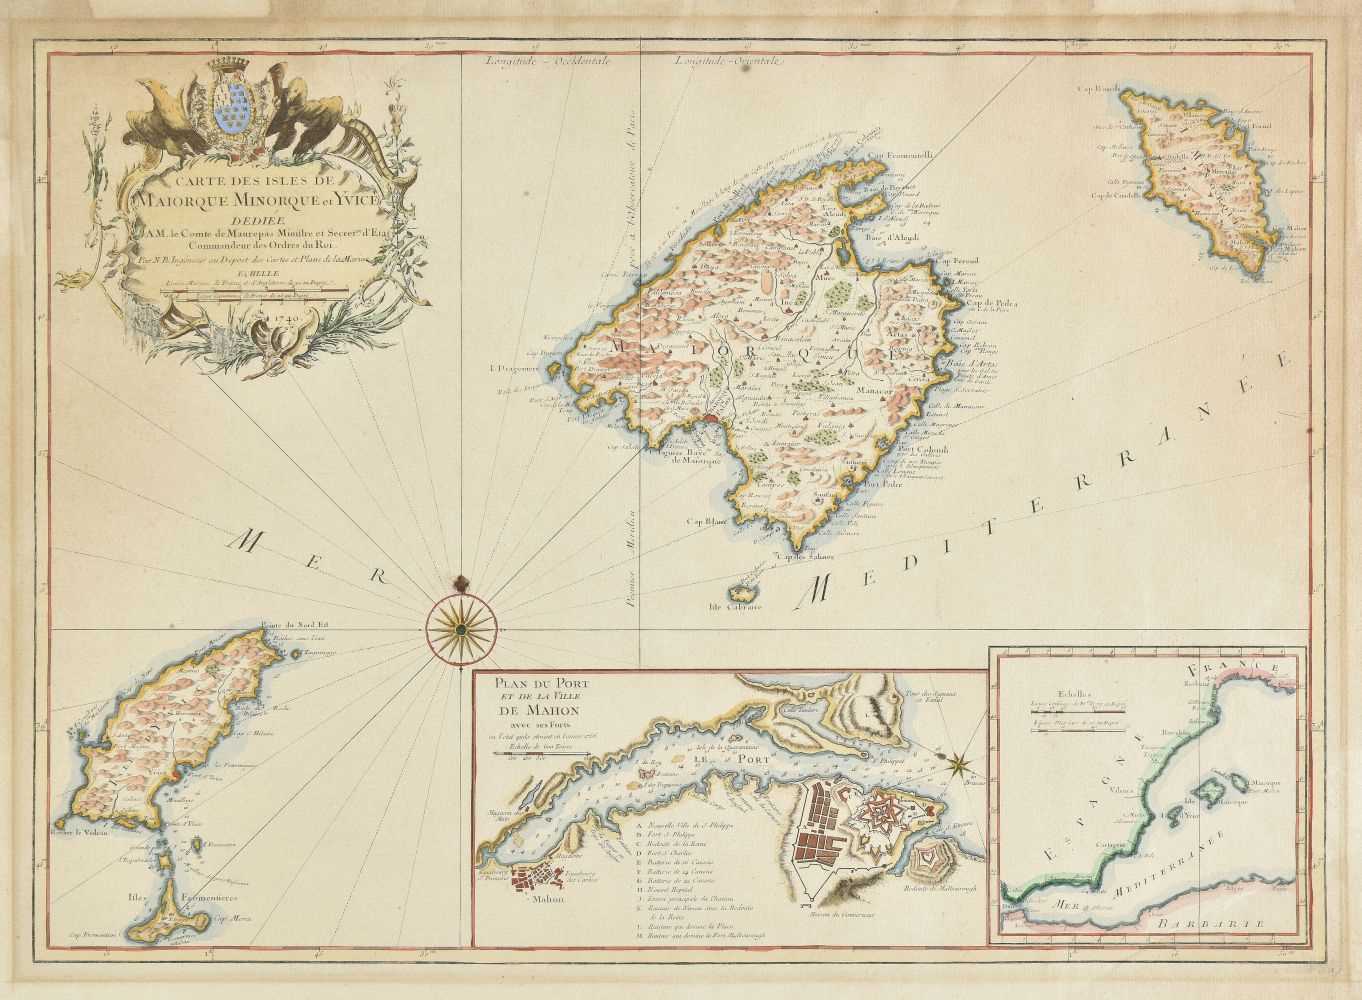 Lot 10 - Balearic Islands. Bellin (Jacques Nicolas), Carte des Isles de Maiorque..., 1740